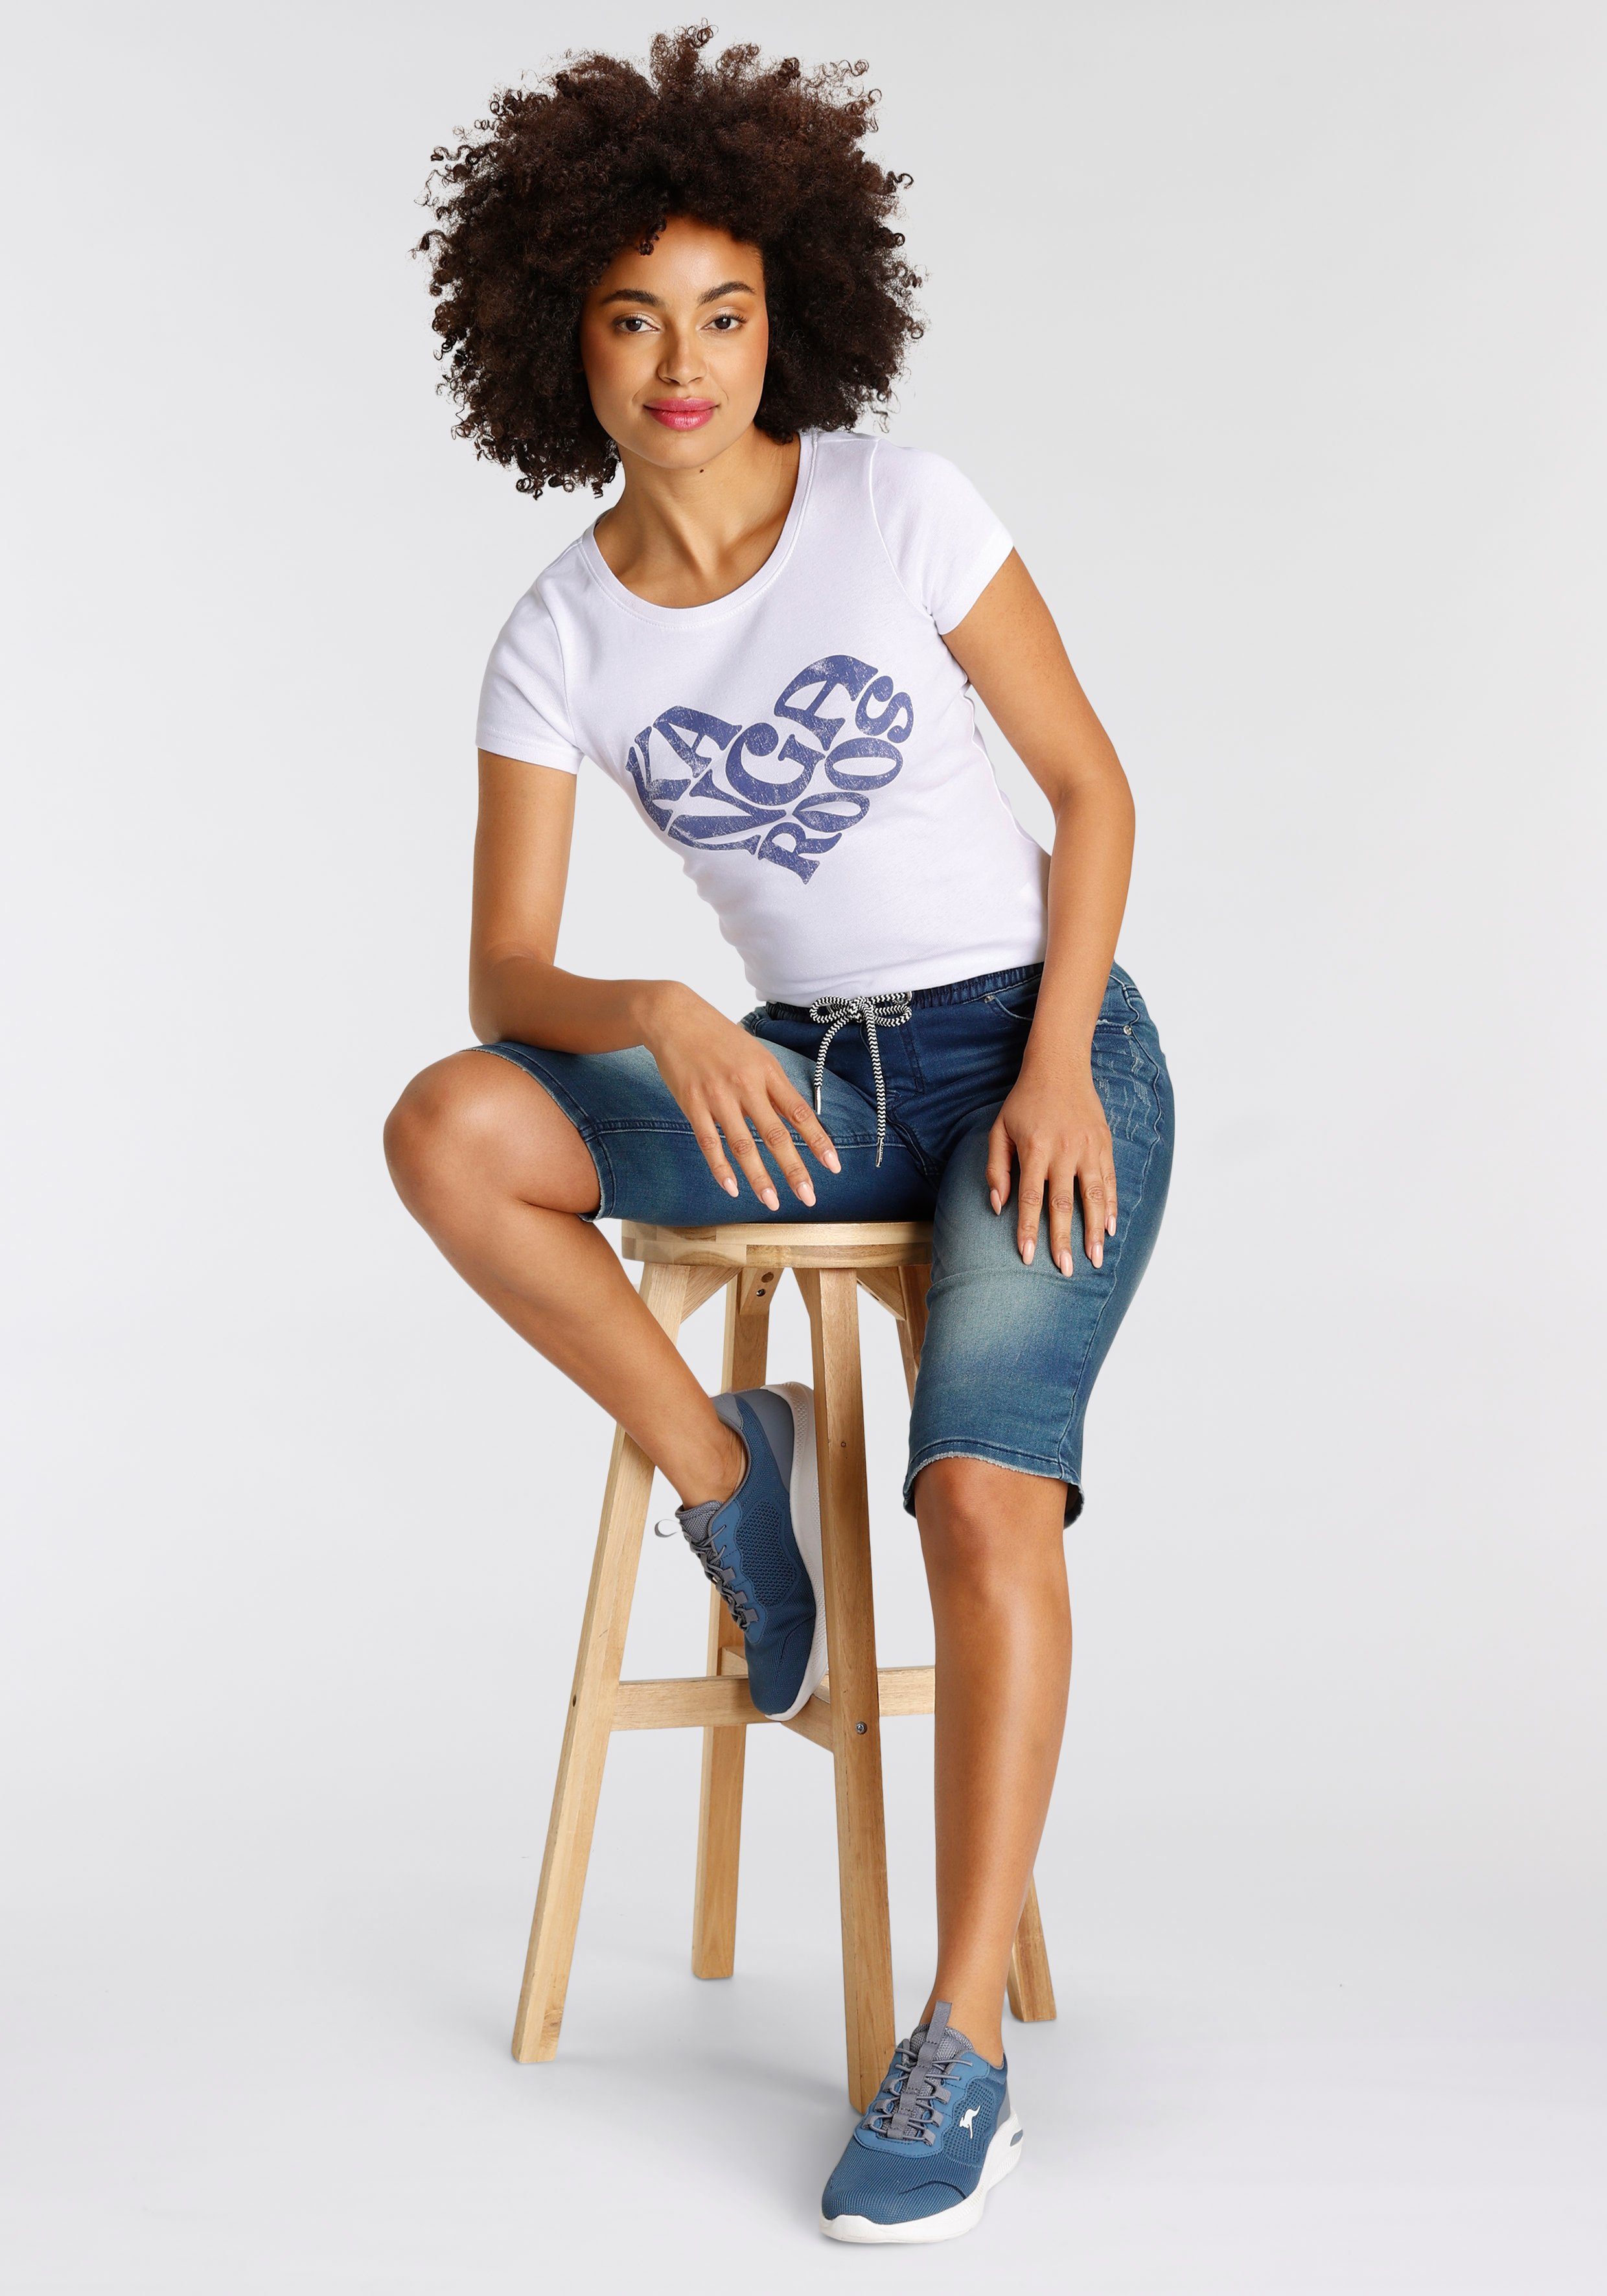 KangaROOS Print-Shirt mit herzlichem NEUE weiß-blau - KOLLEKTION Retro-Logoprint